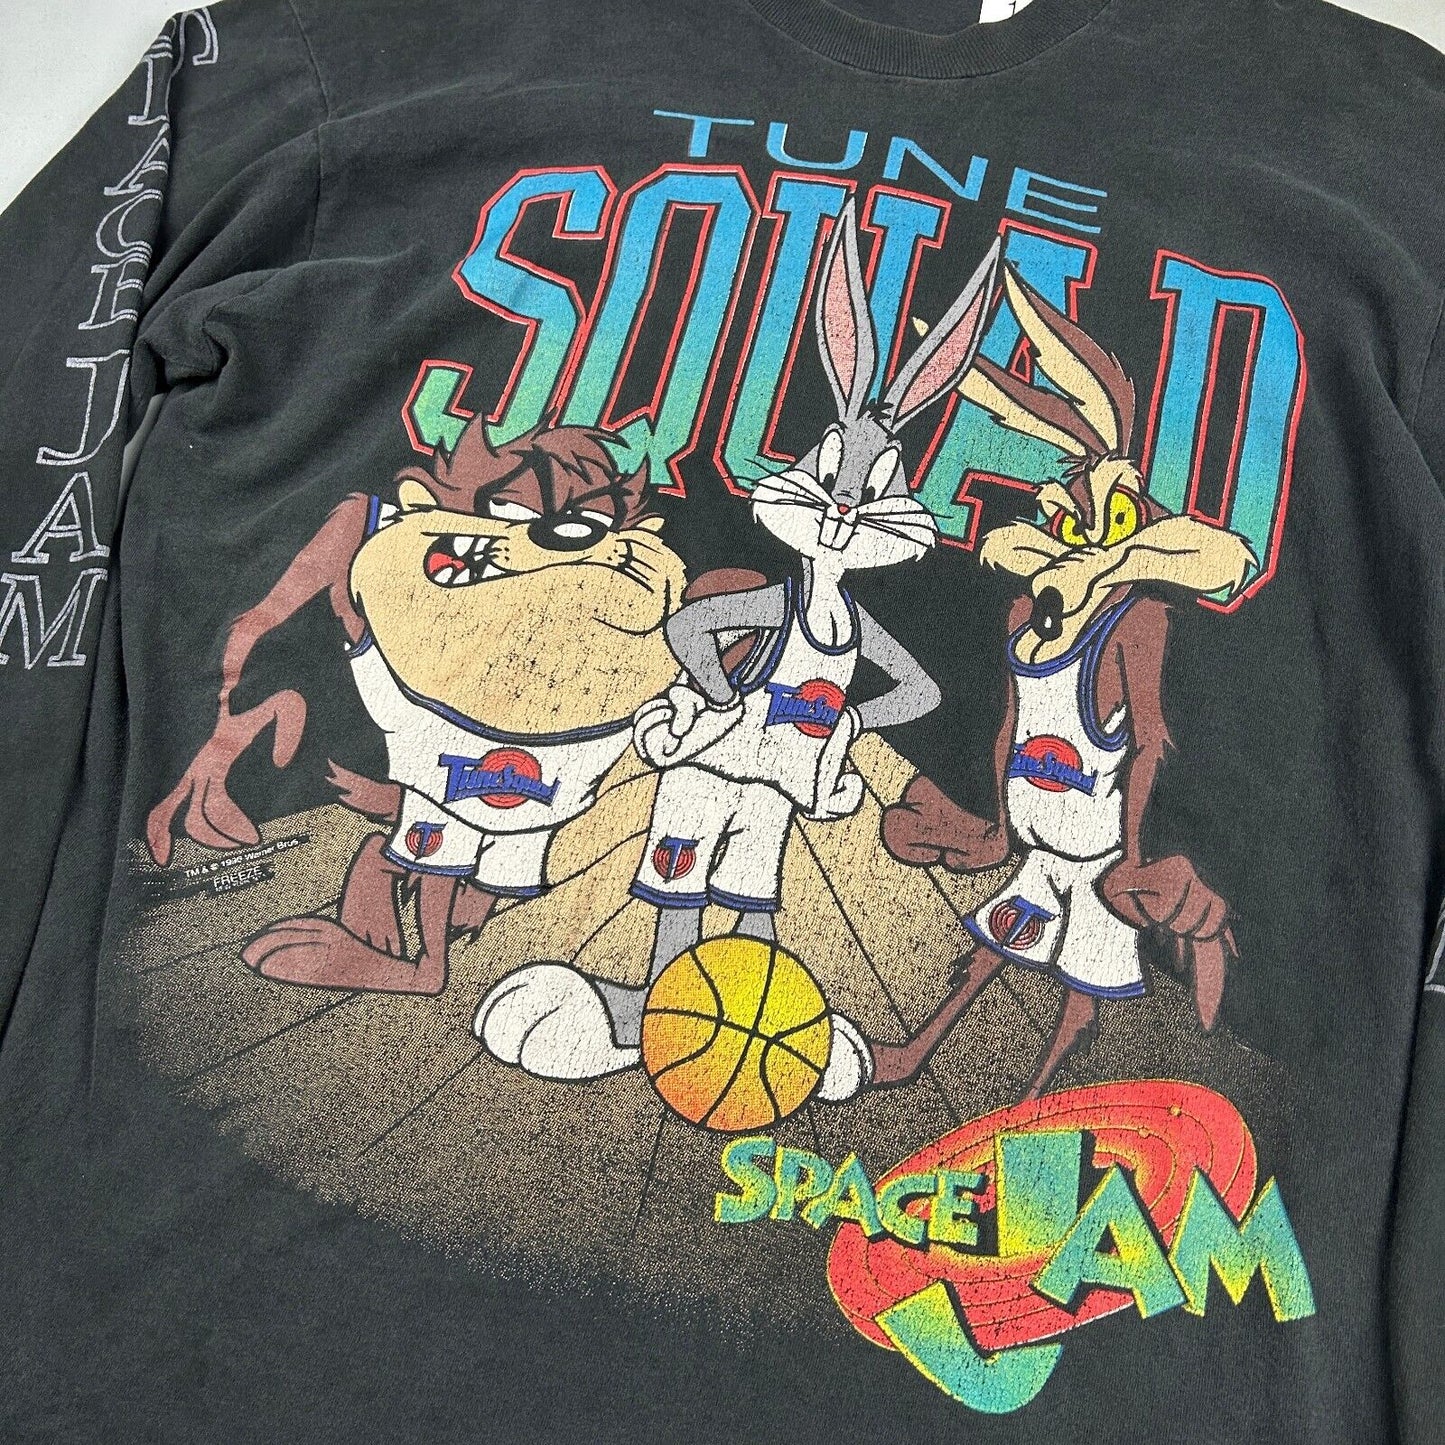 VINTAGE 1996 Space Jam Tune Squad Long Sleeve T-Shirt sz XL Adult